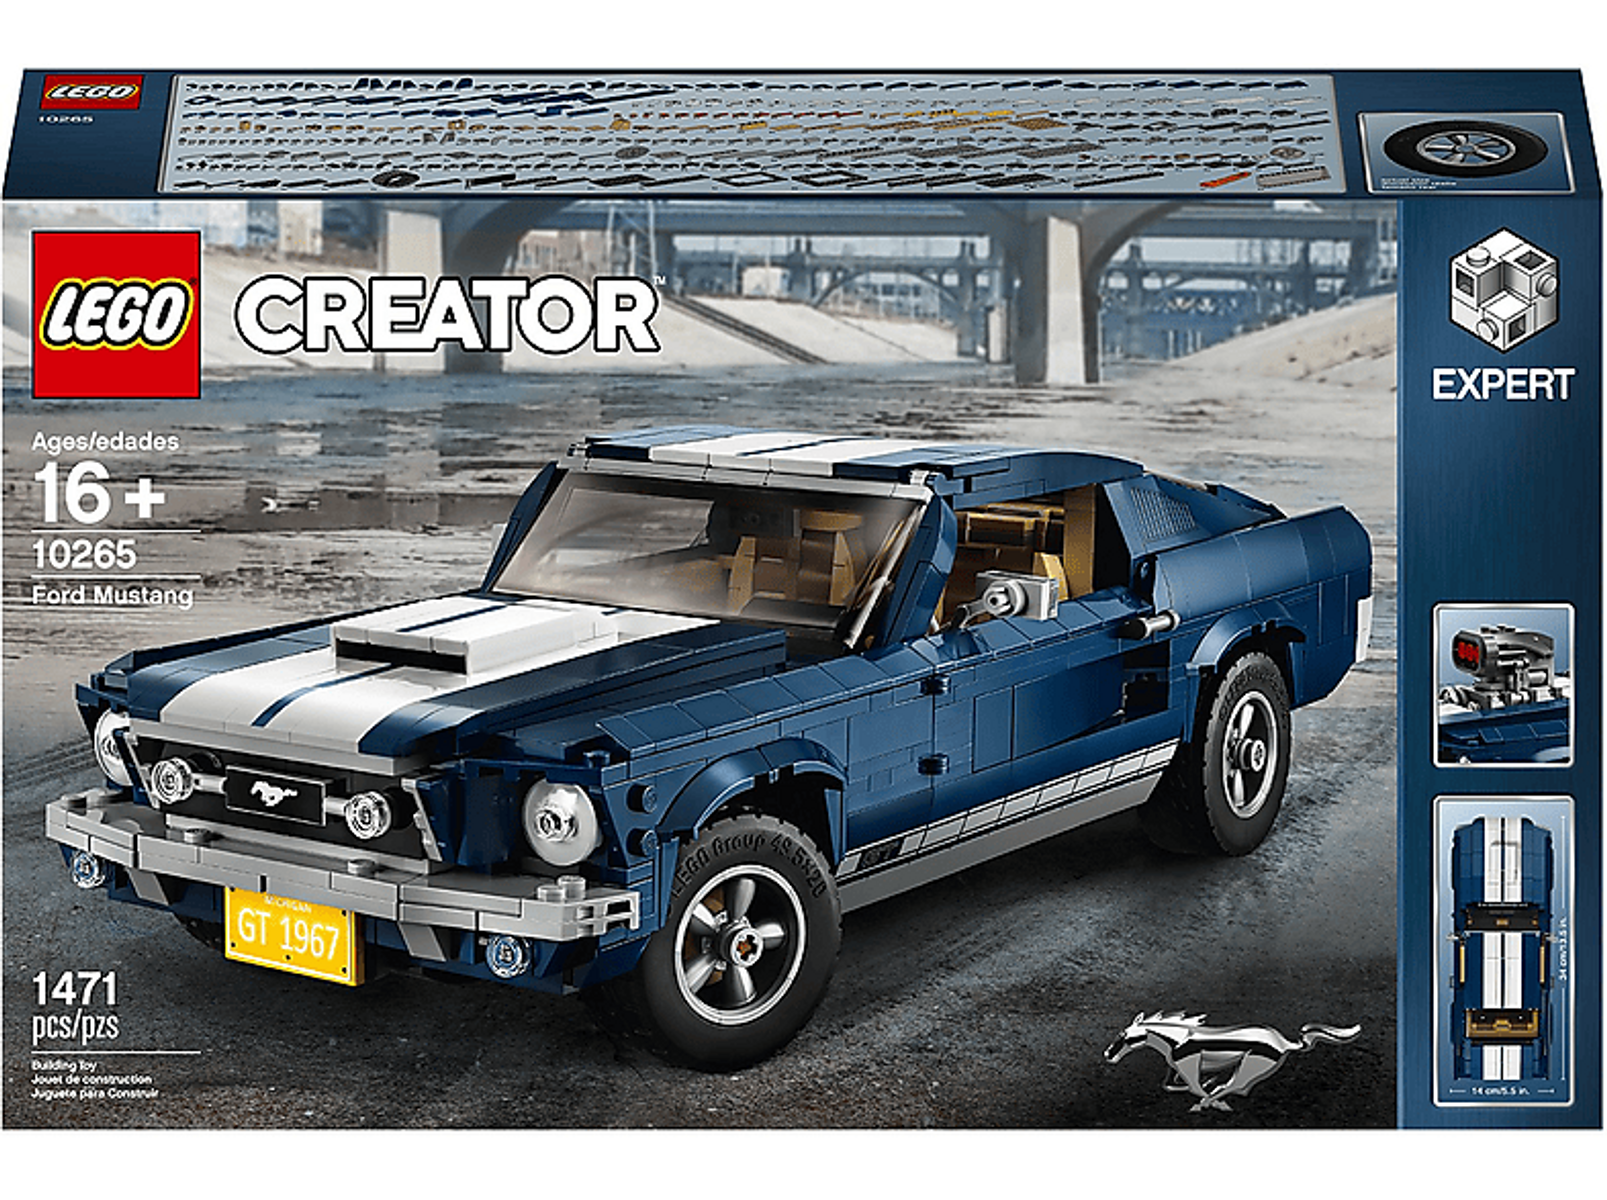 LEGO SOP LEGO Mehrfarbig Bausatz Ford 10265 Creator Mustang Expert